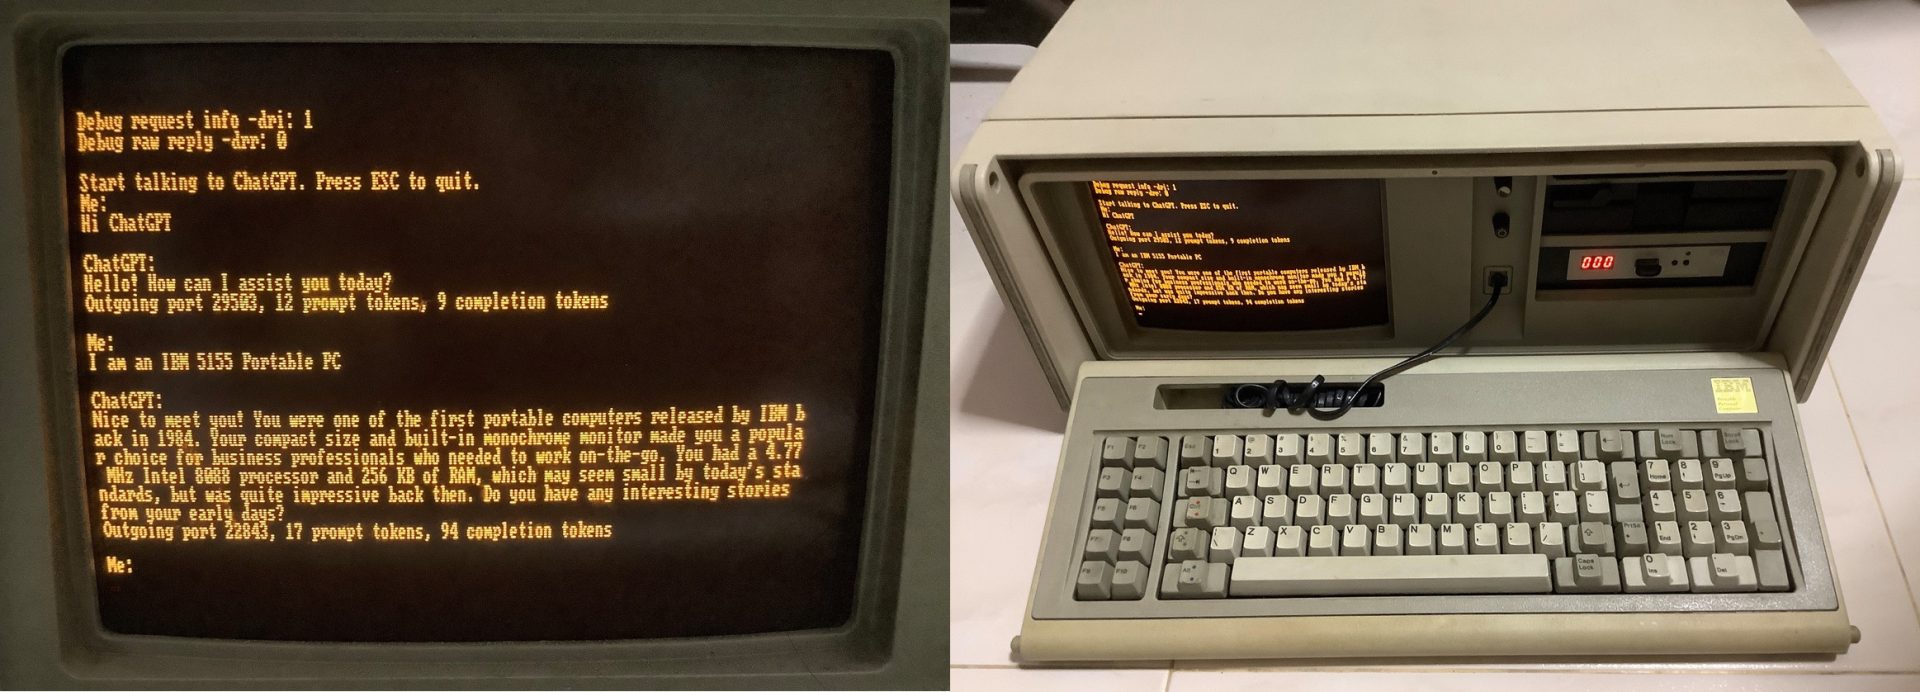 MS-DOS-ChatGPT-Uygulamasi-1984-Model-IBM-PCde-Calistirildi2-1920x692.jpg